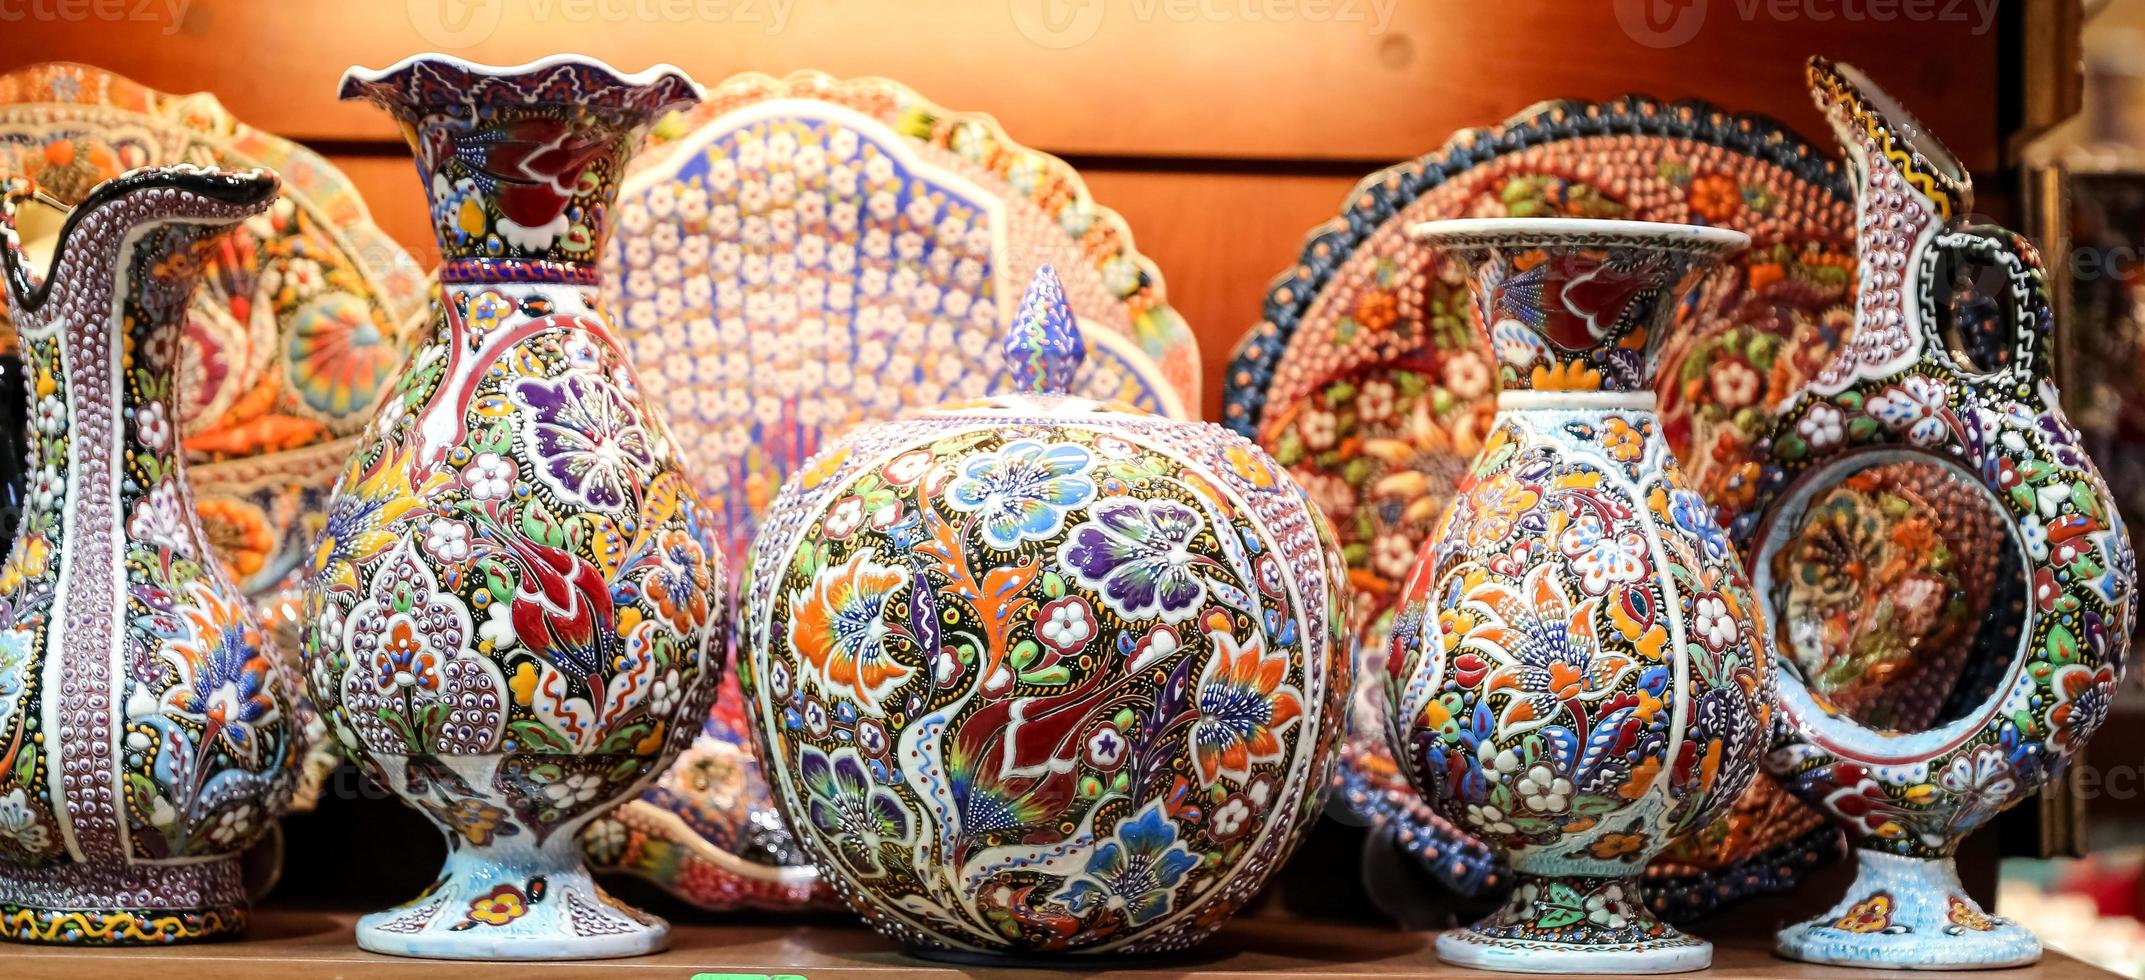 Turkish Ceramics in Grand Bazaar, Istanbul, Turkey photo